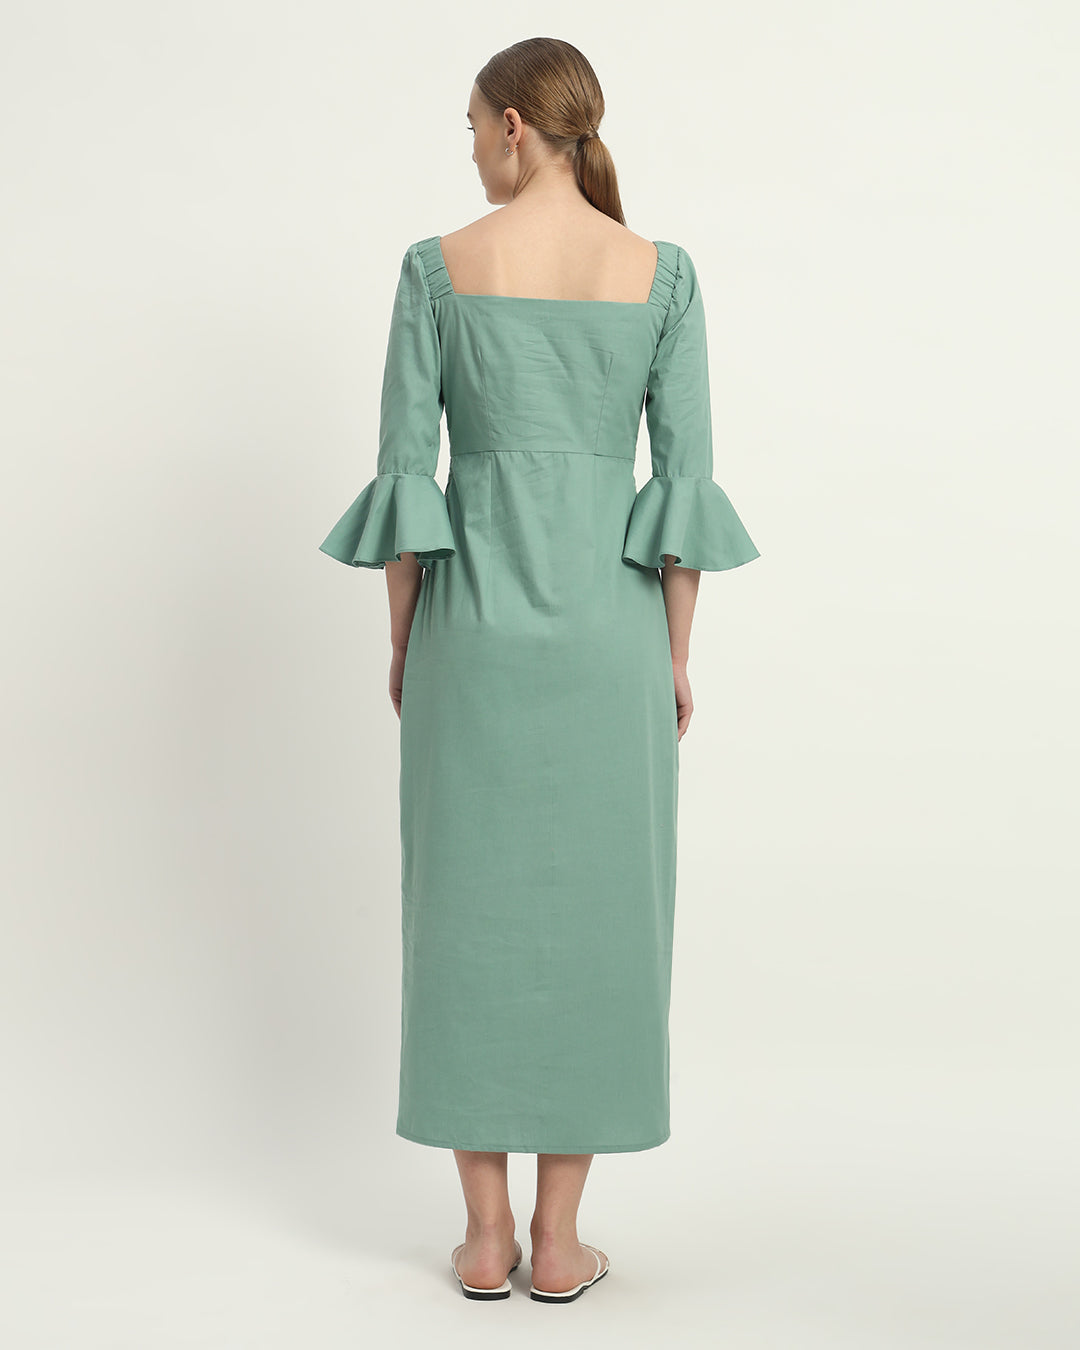 The Mint Rosendale Cotton Dress